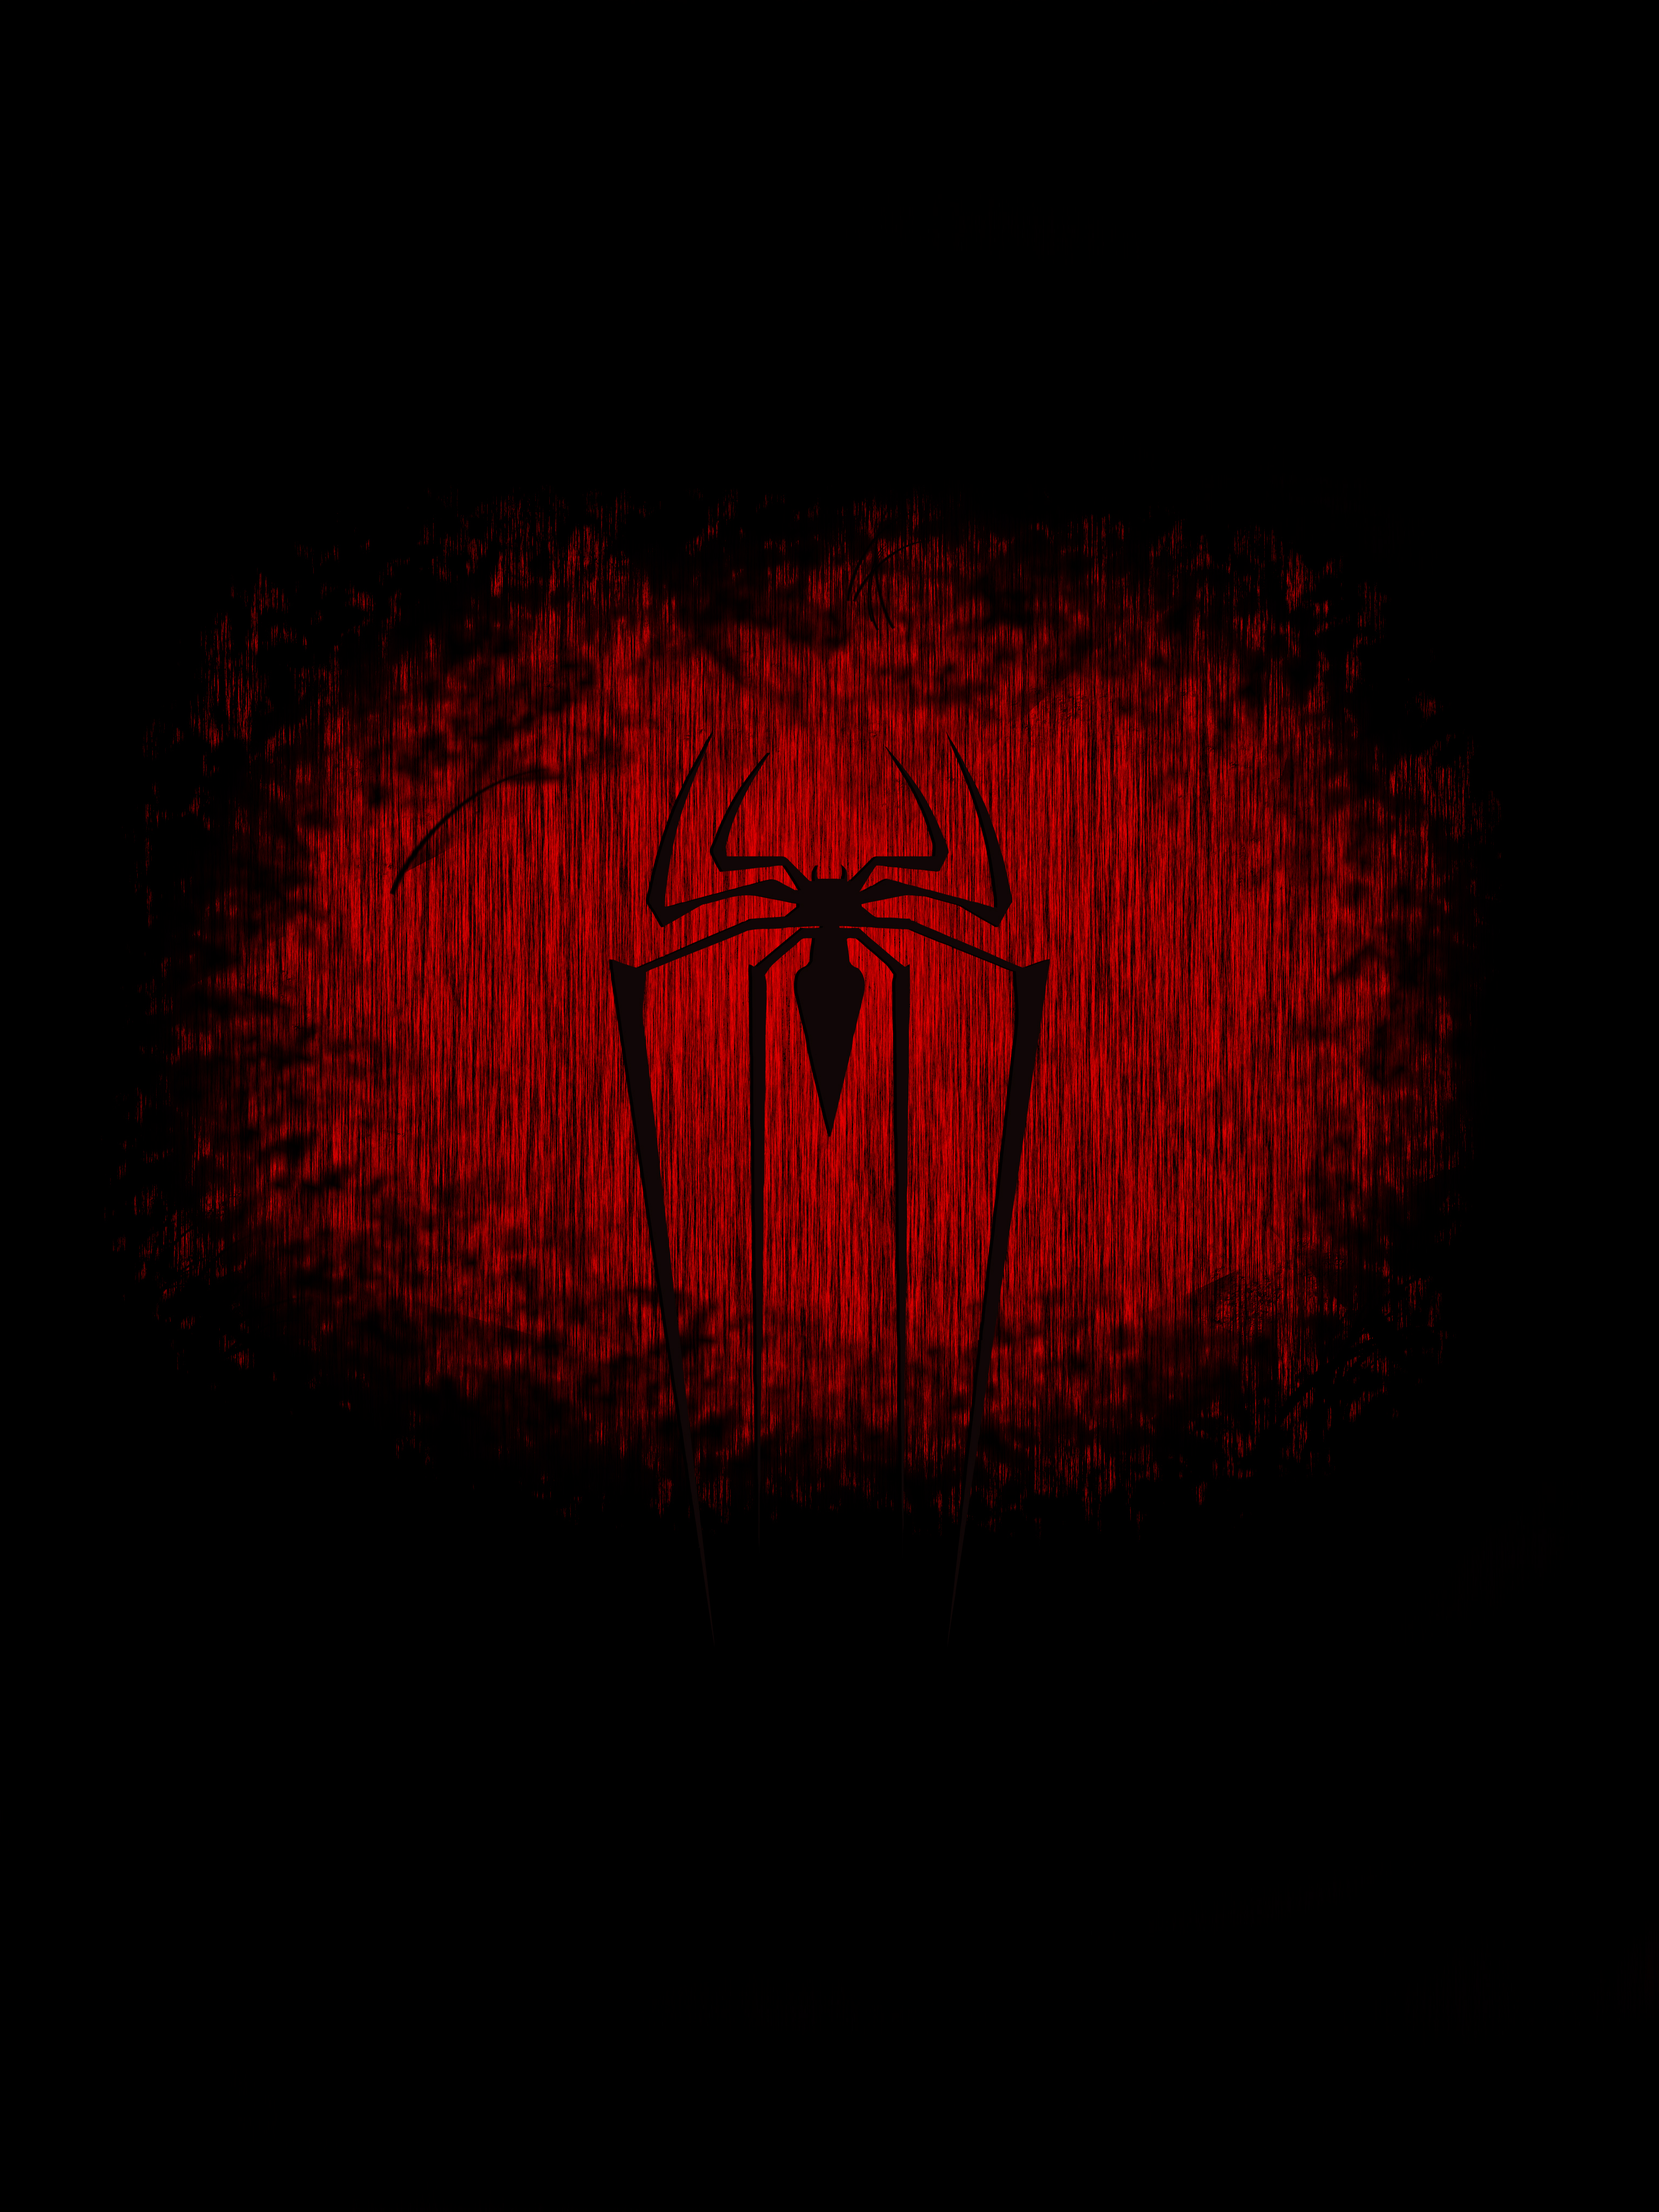 The Amazing Spiderman - HD Wallpaper by ShikharSrivastava on DeviantArt